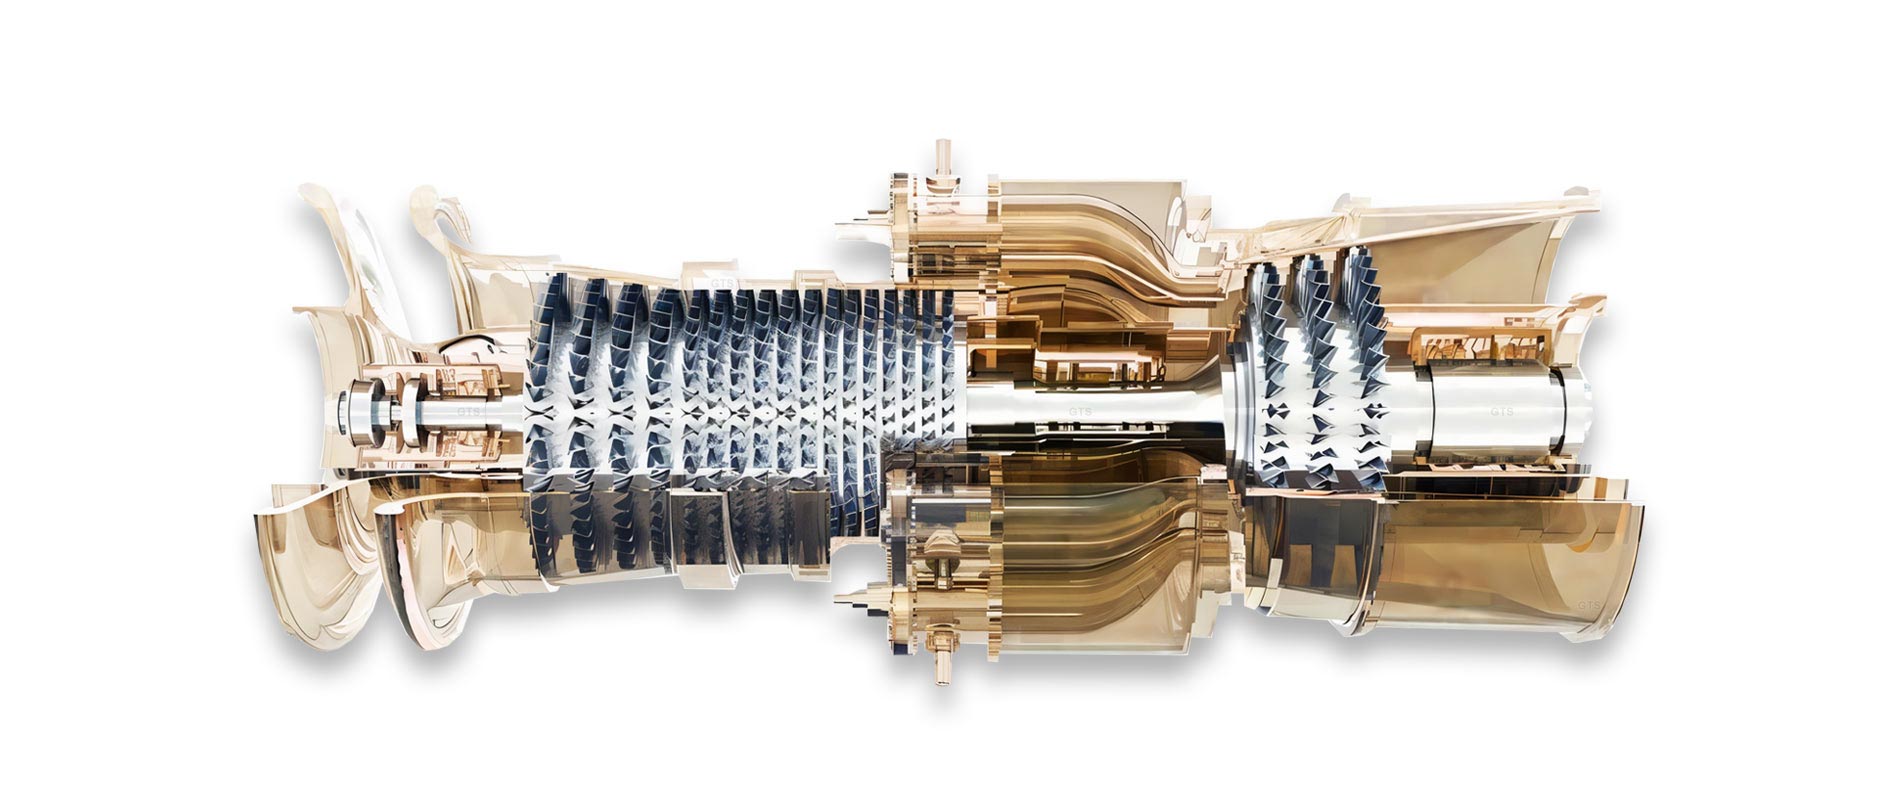 Gas turbine parts | Steam turbine parts and Components | Gas Turbine Parts Supplier | OEM Equivalent Turbine Parts | GTS Wamar